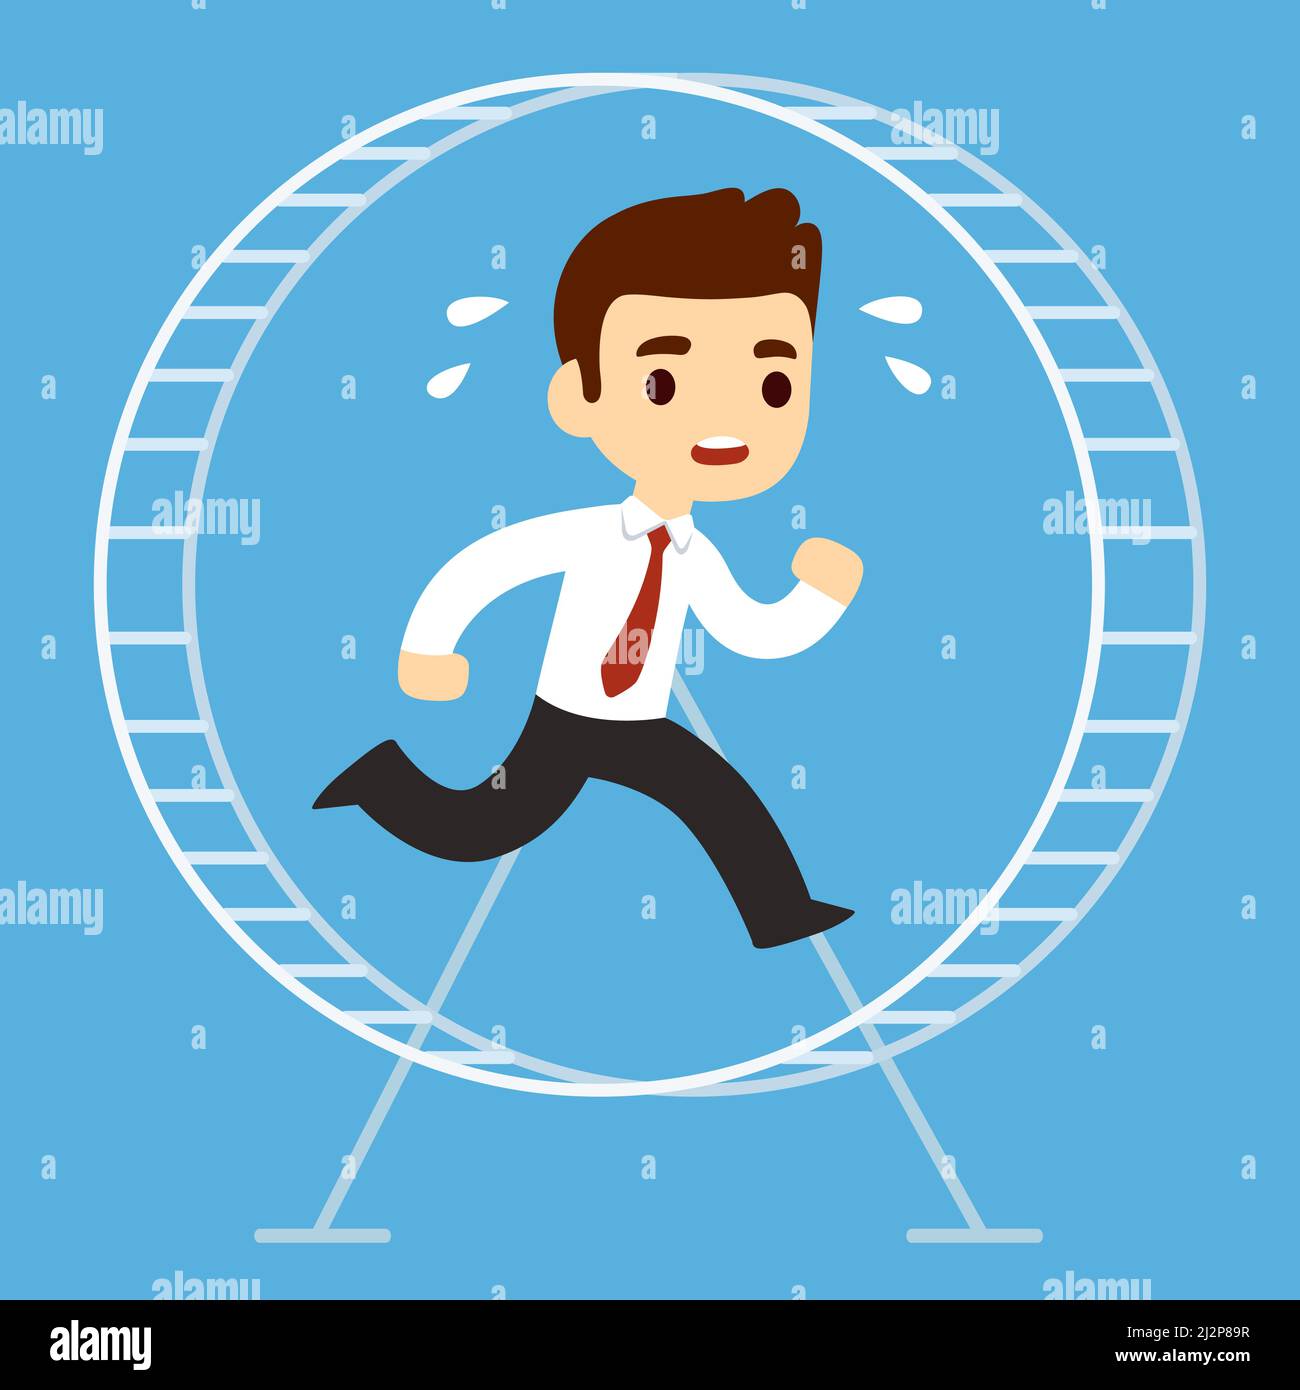 Stressed office worker running in hamster wheel. Rat race concept illustration. Stock Vector